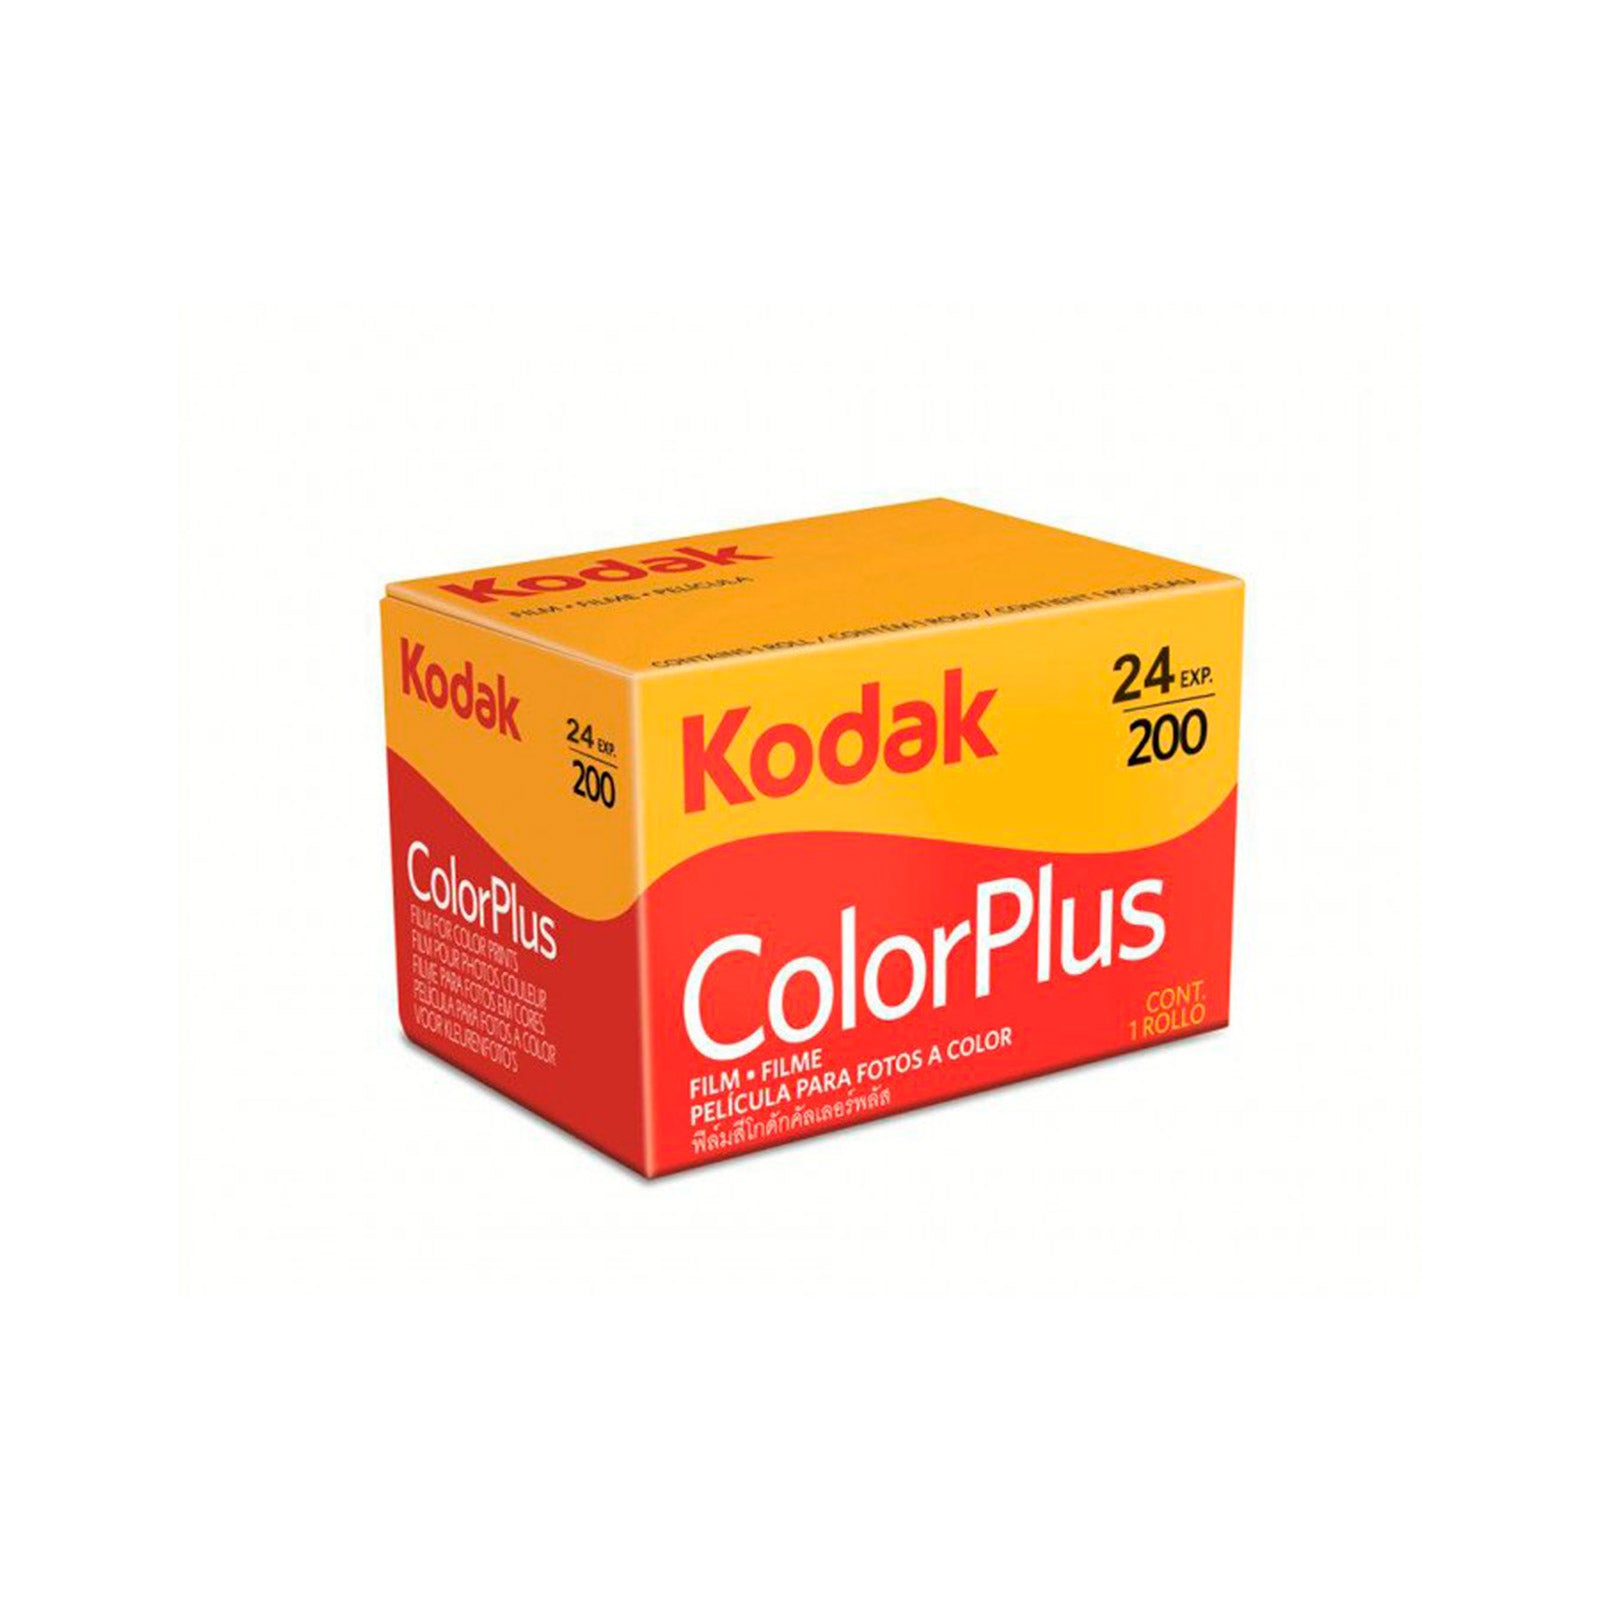 Kodak ColorPlus 200 - 35 mm (24 exp.)